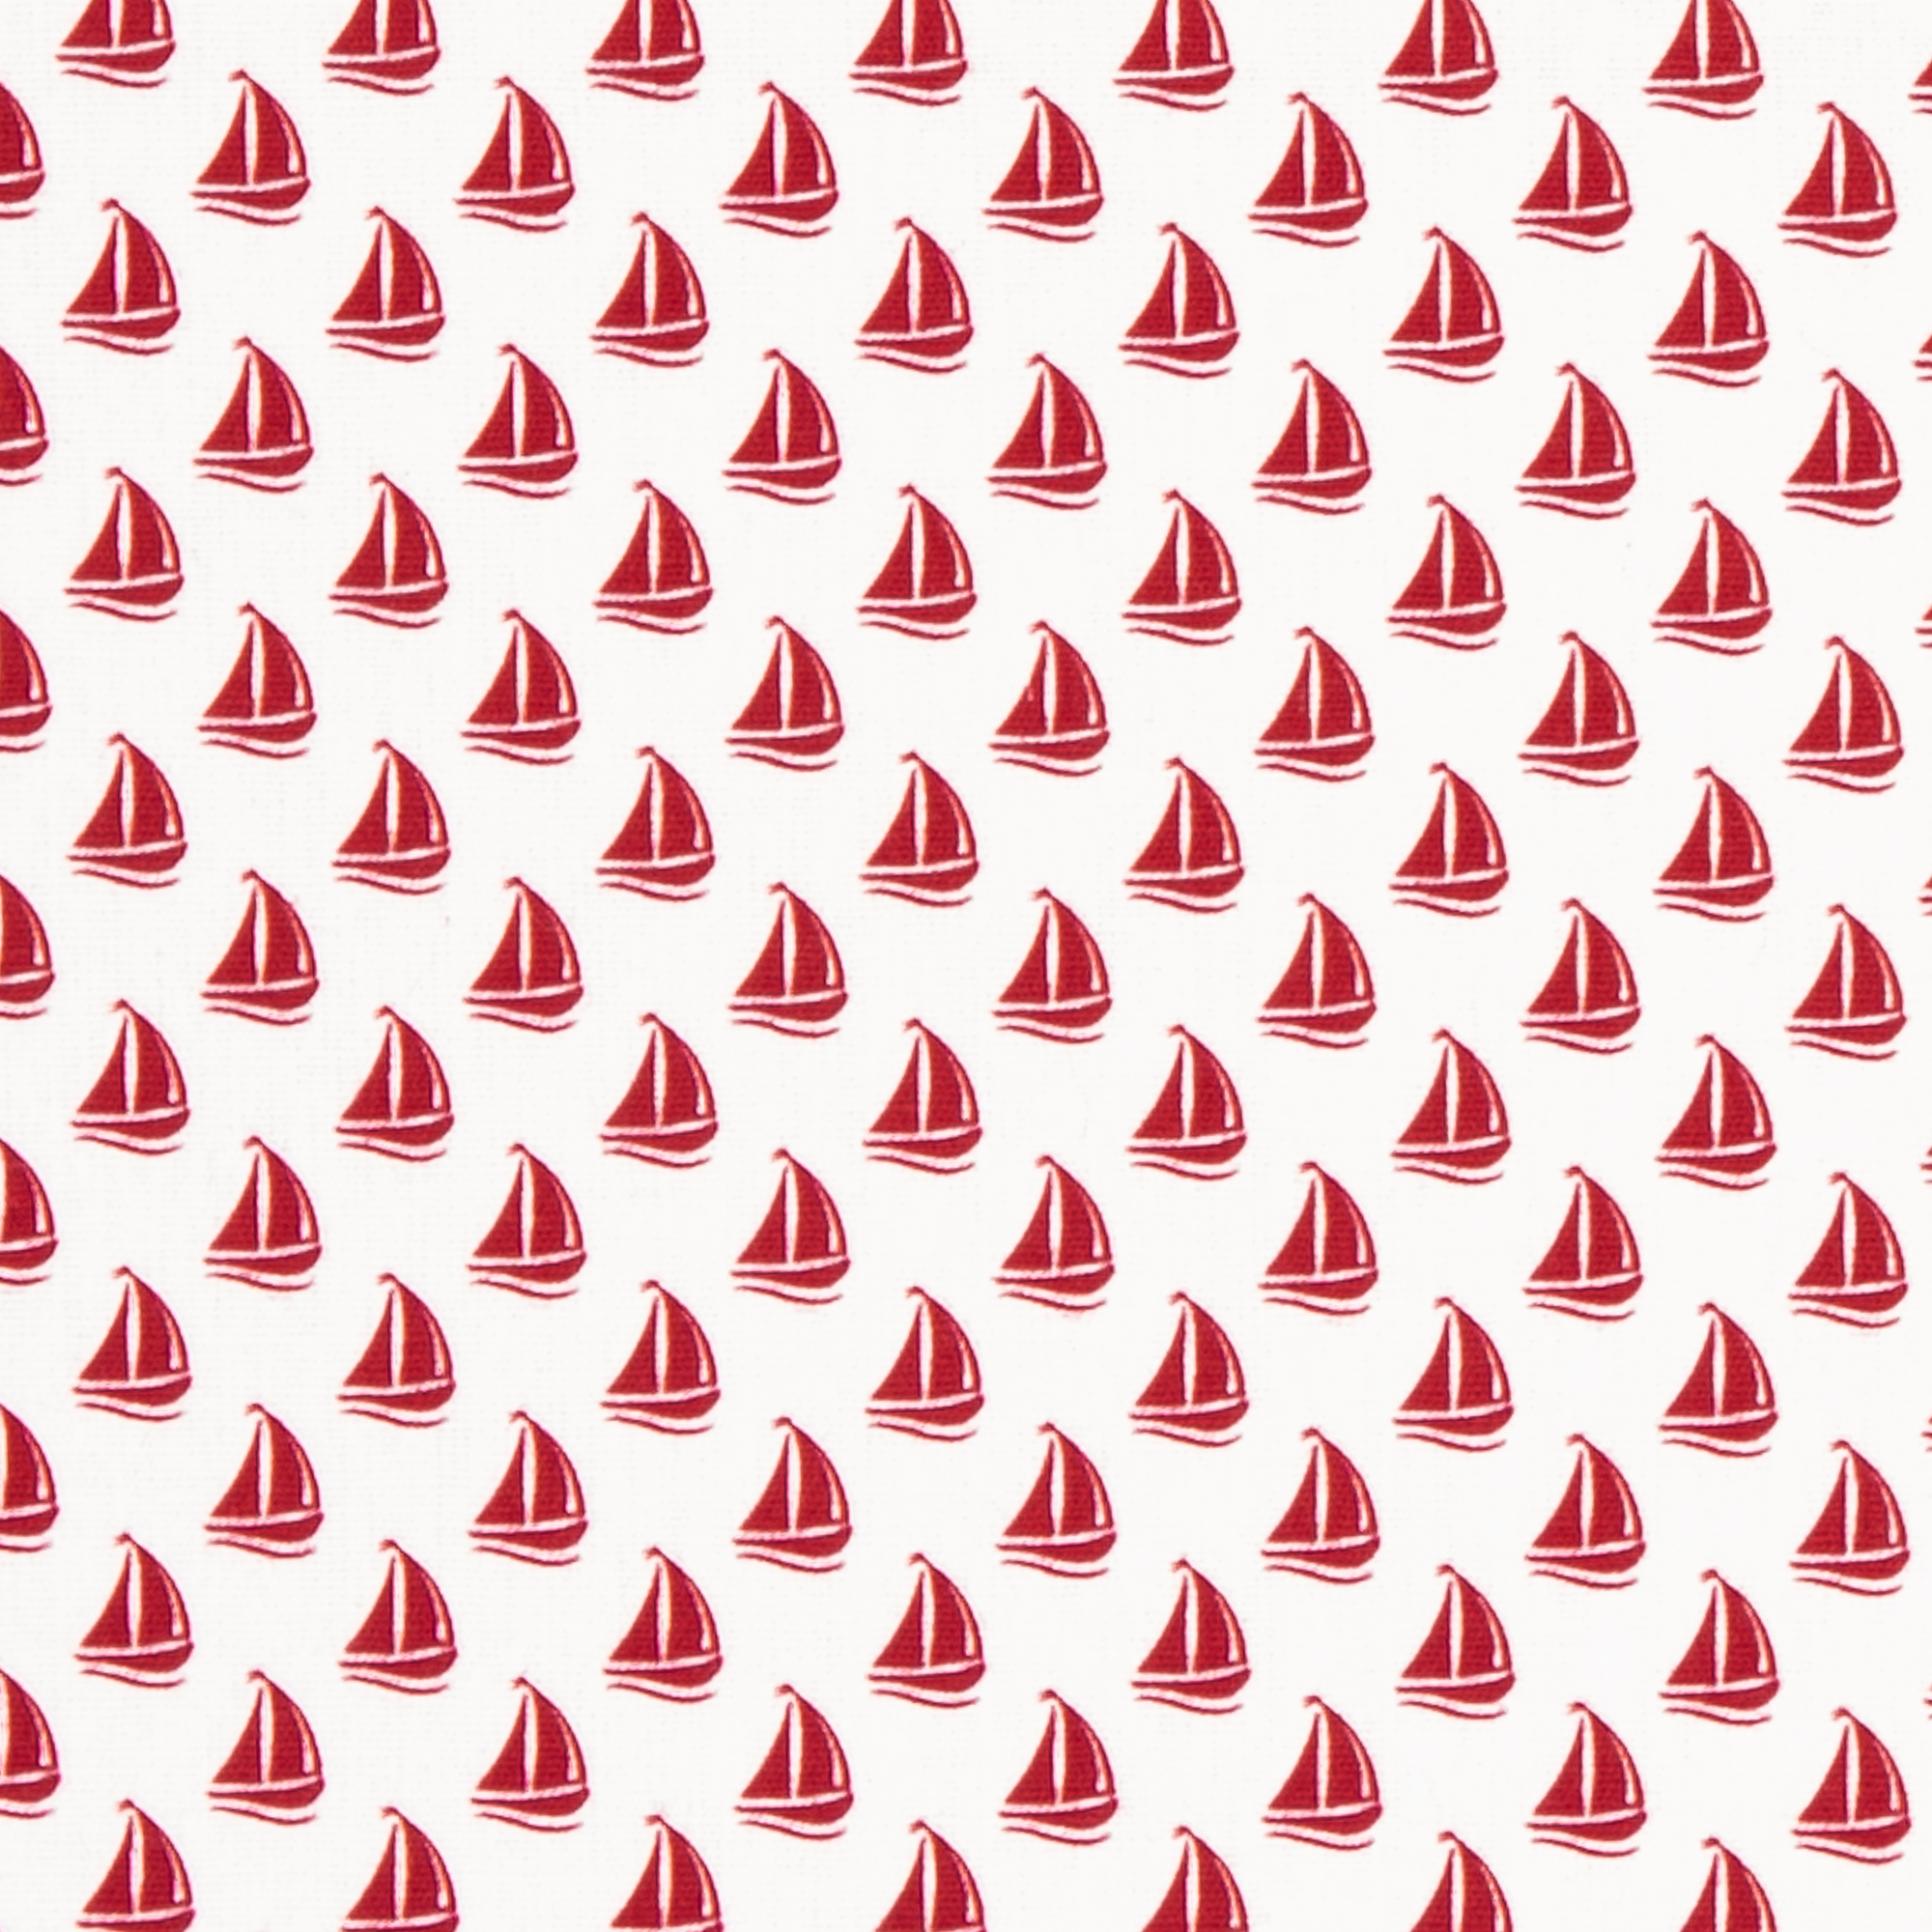 Maritime - Sailboats - white-red